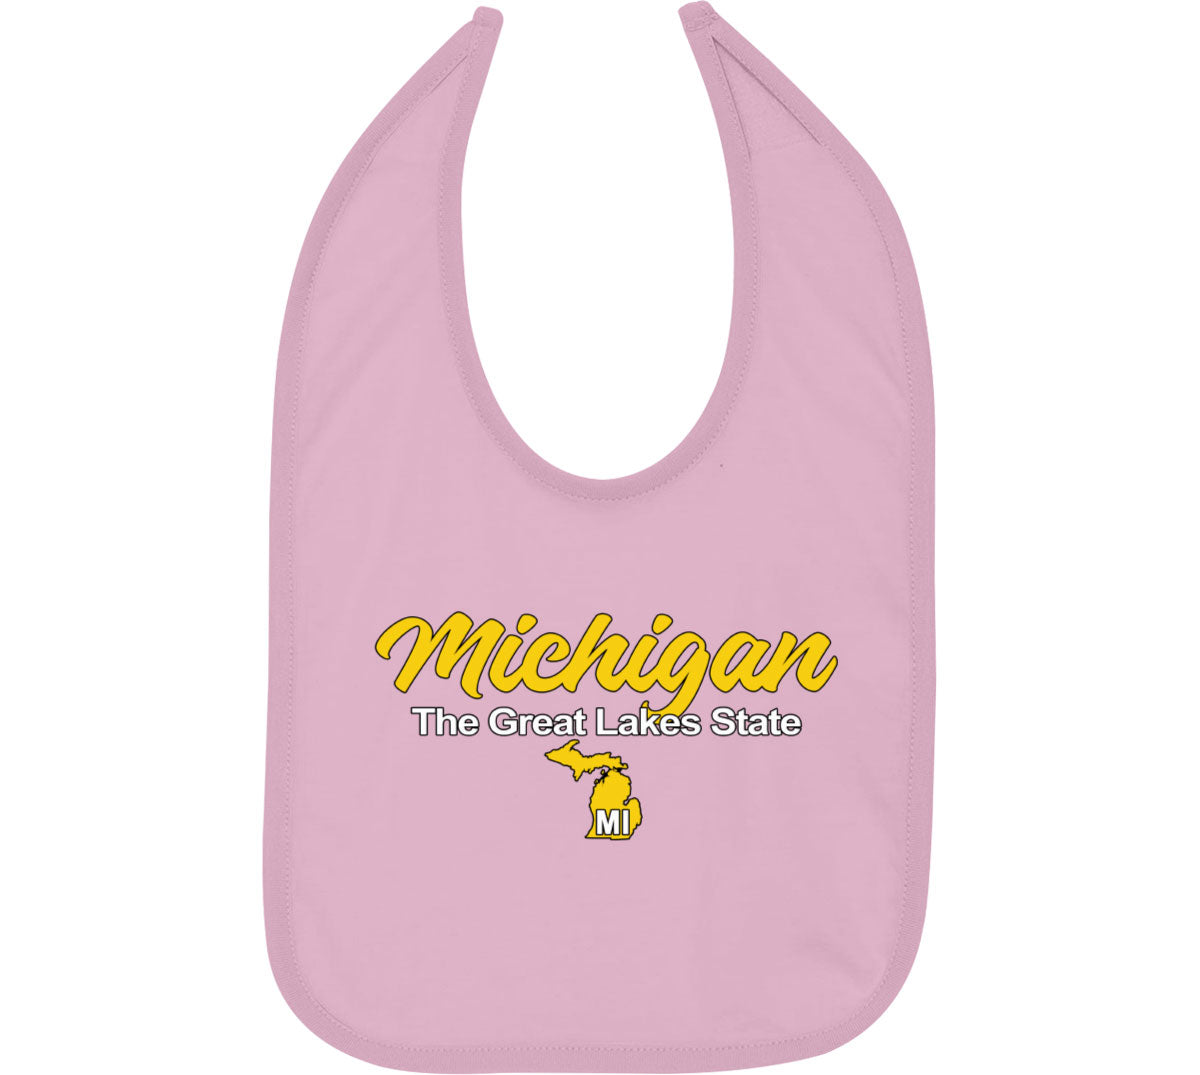 Michigan The Great Lakes State Baby Bib